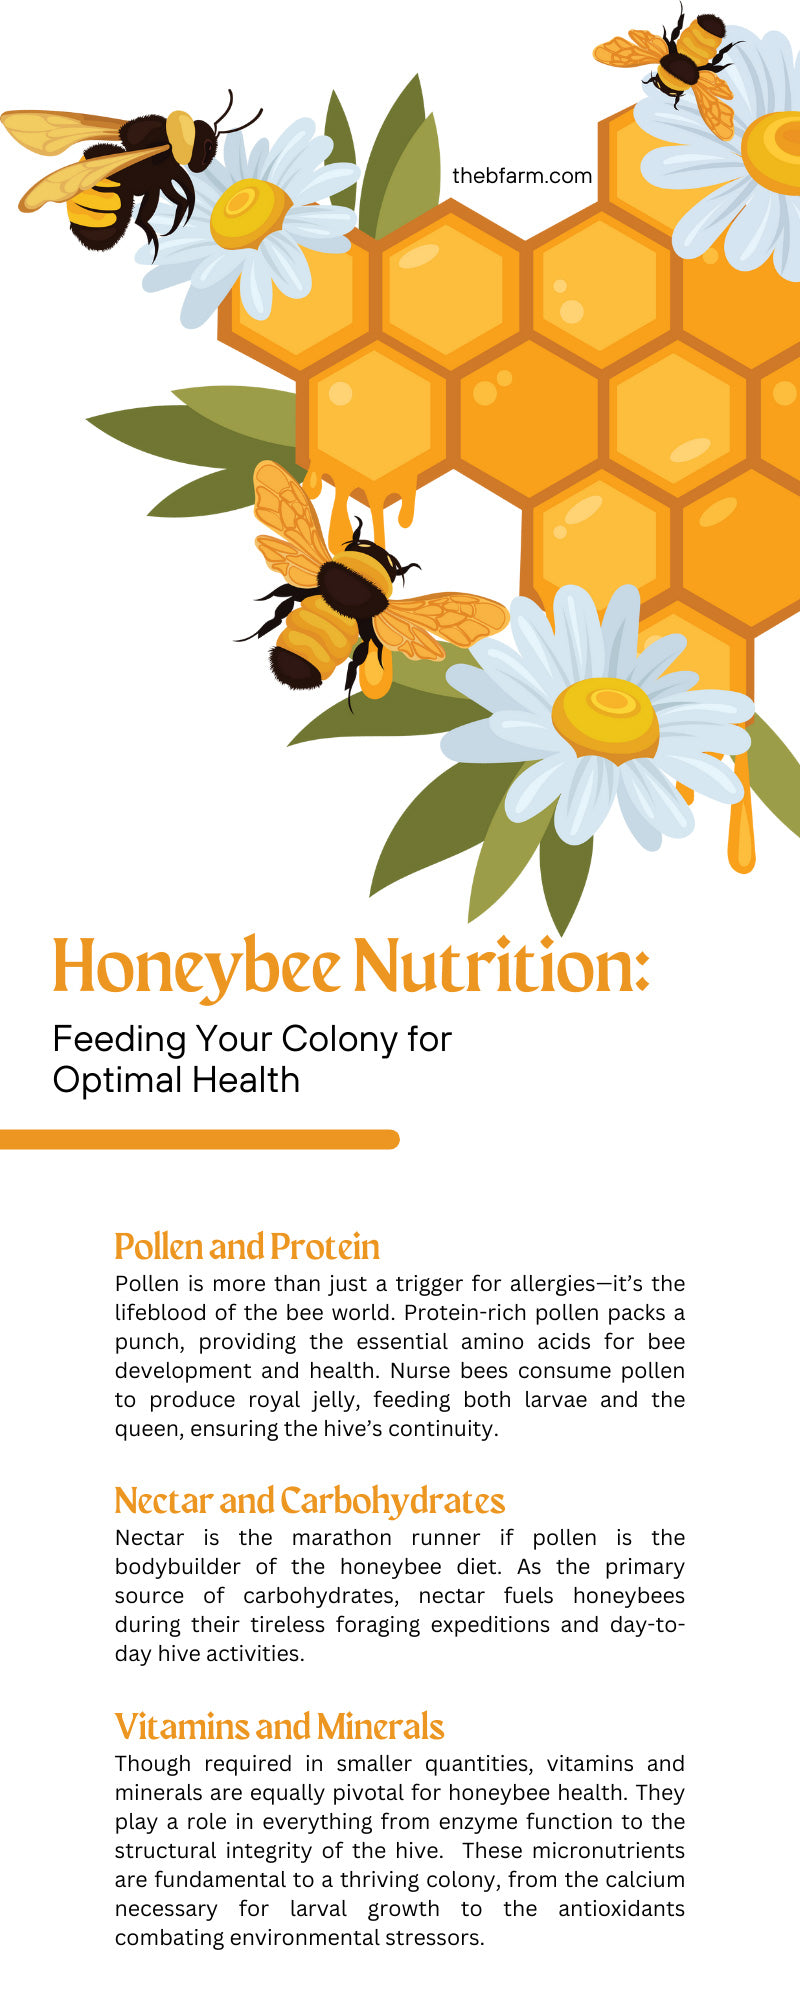 Honeybee Nutrition: Feeding Your Colony for Optimal Health